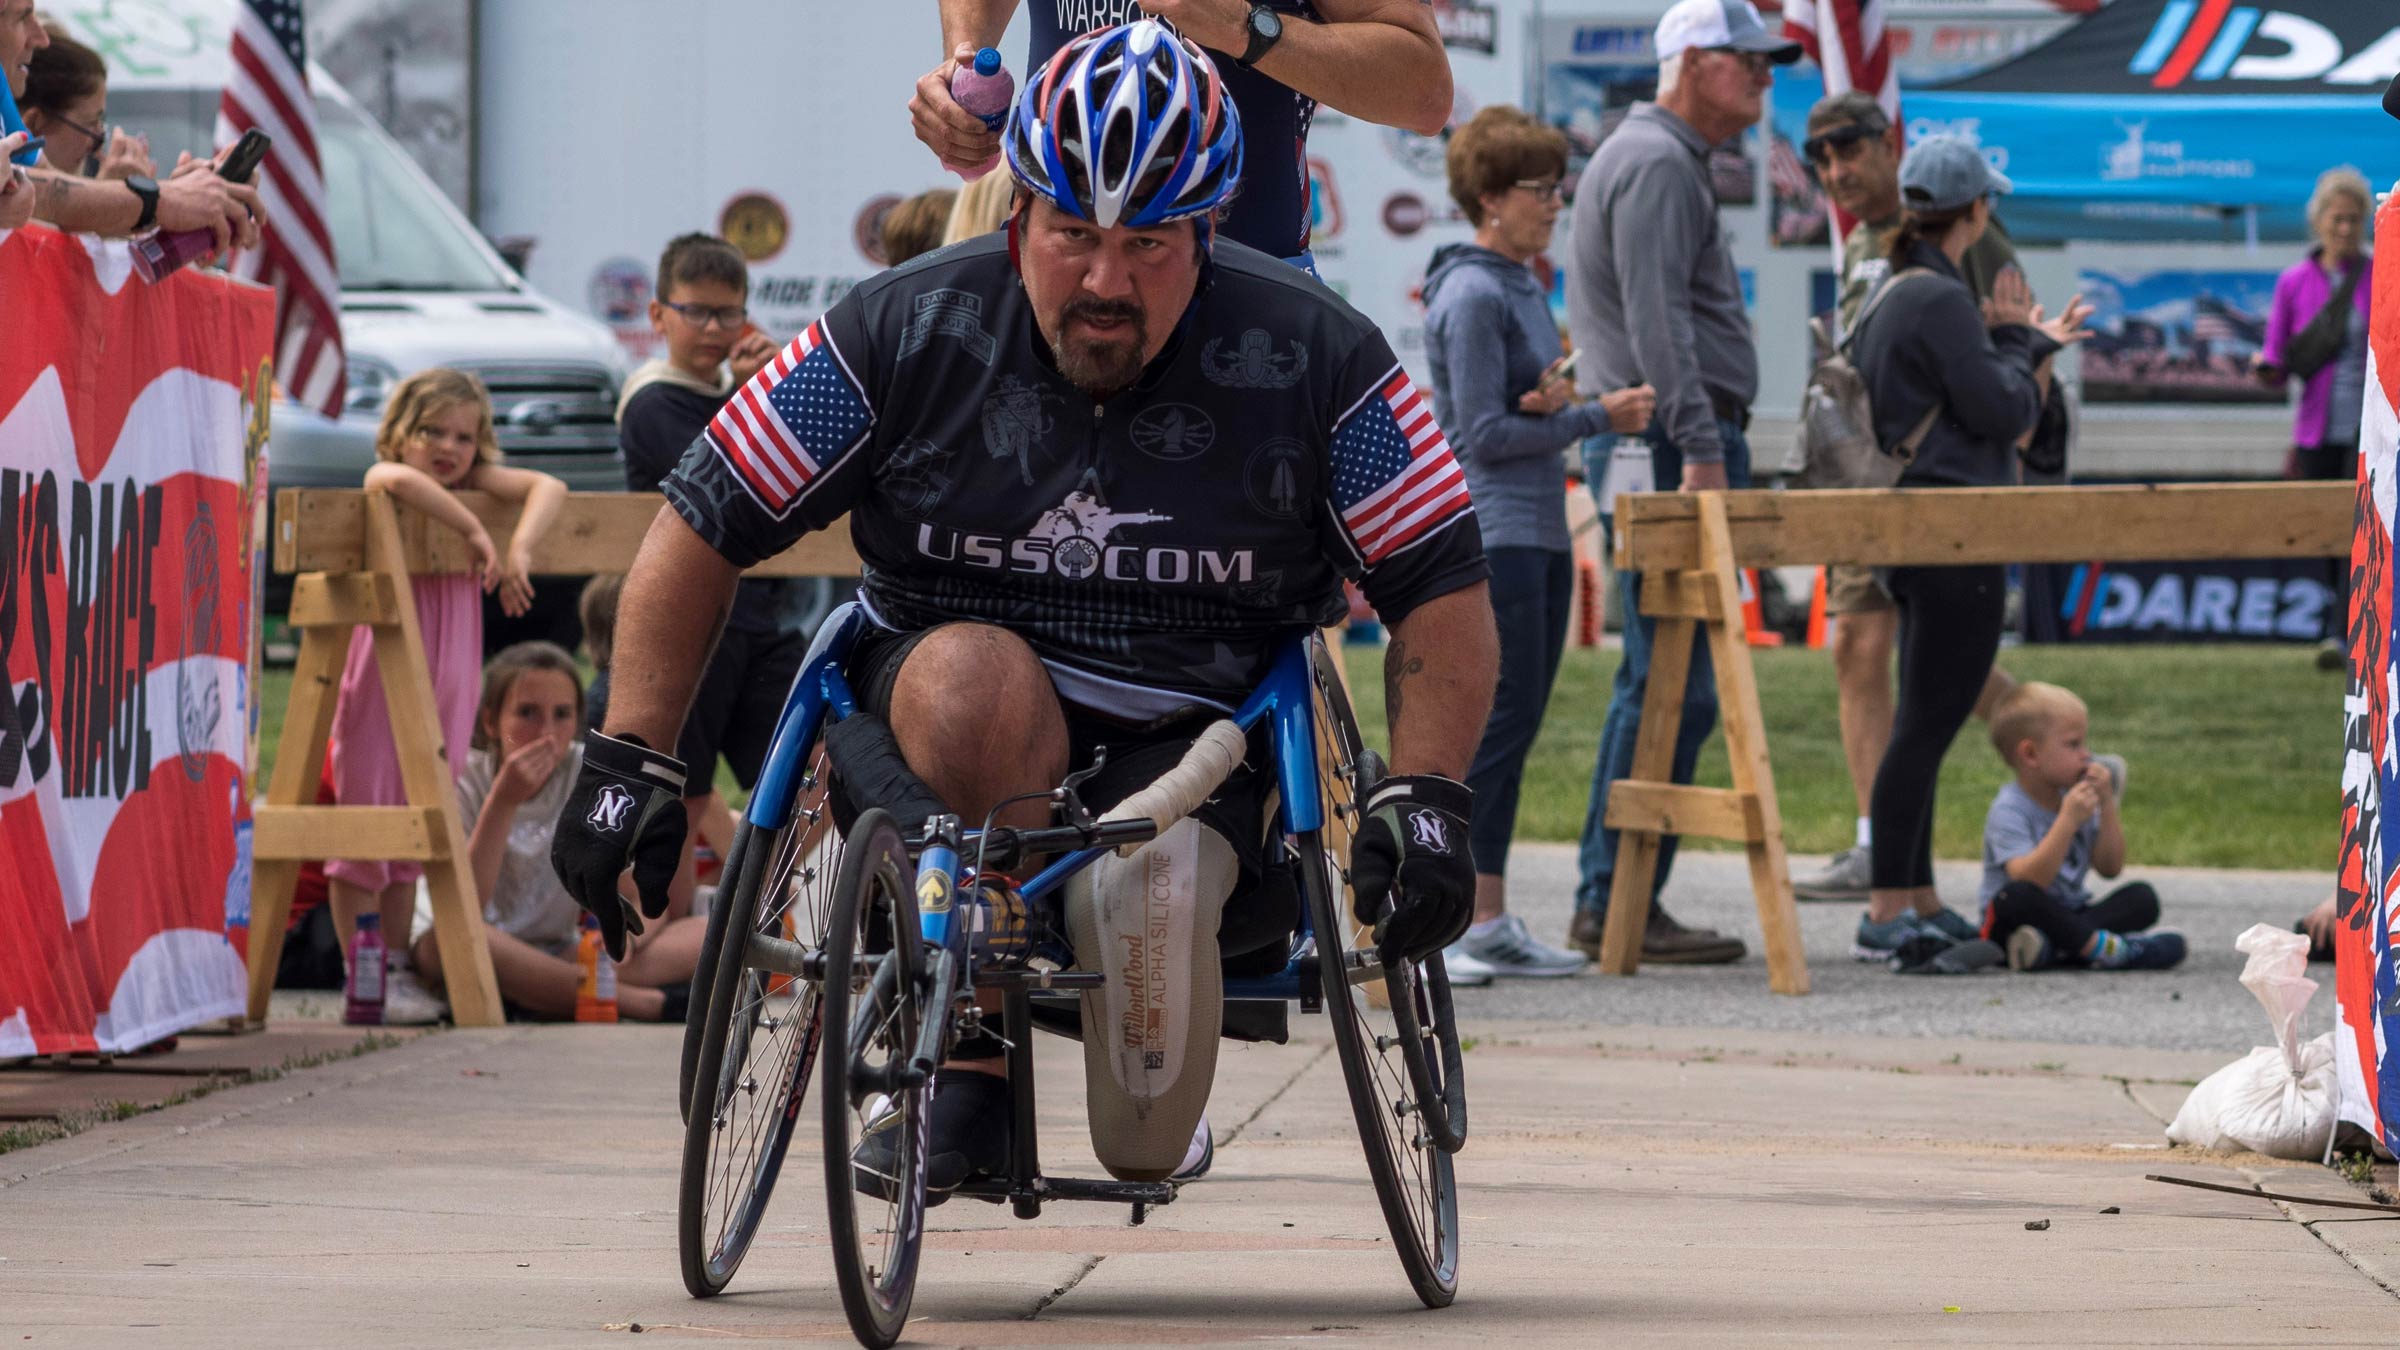 Former U.S. Army Ranger, Shane Jernigan, completing a bike race